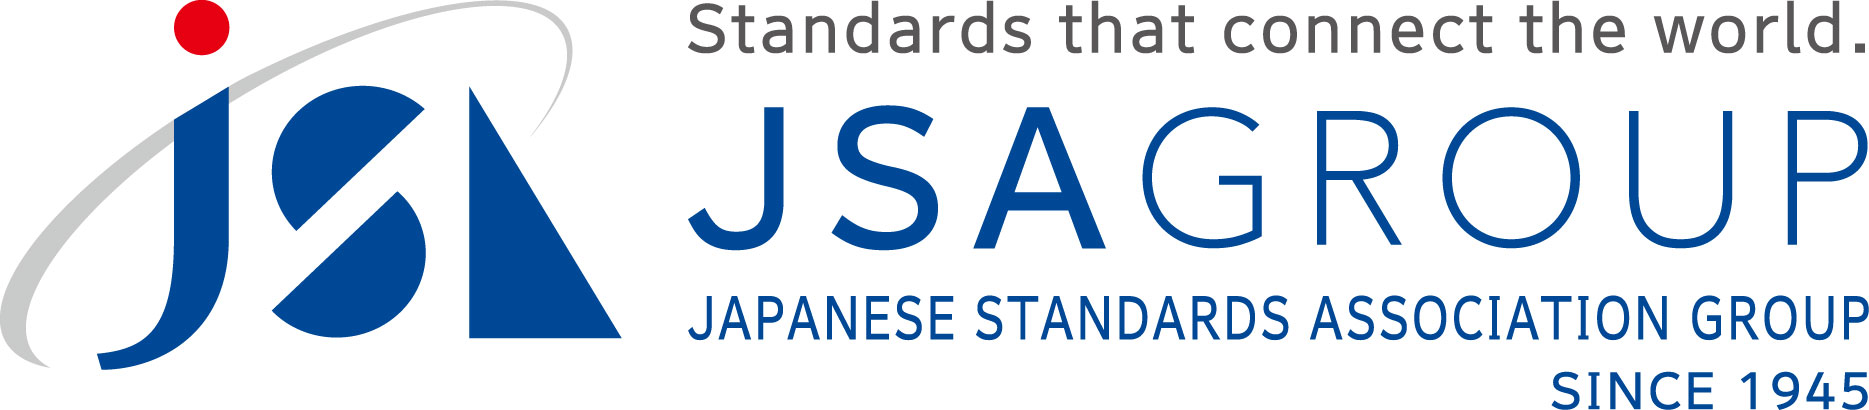 Japanese Standards Association